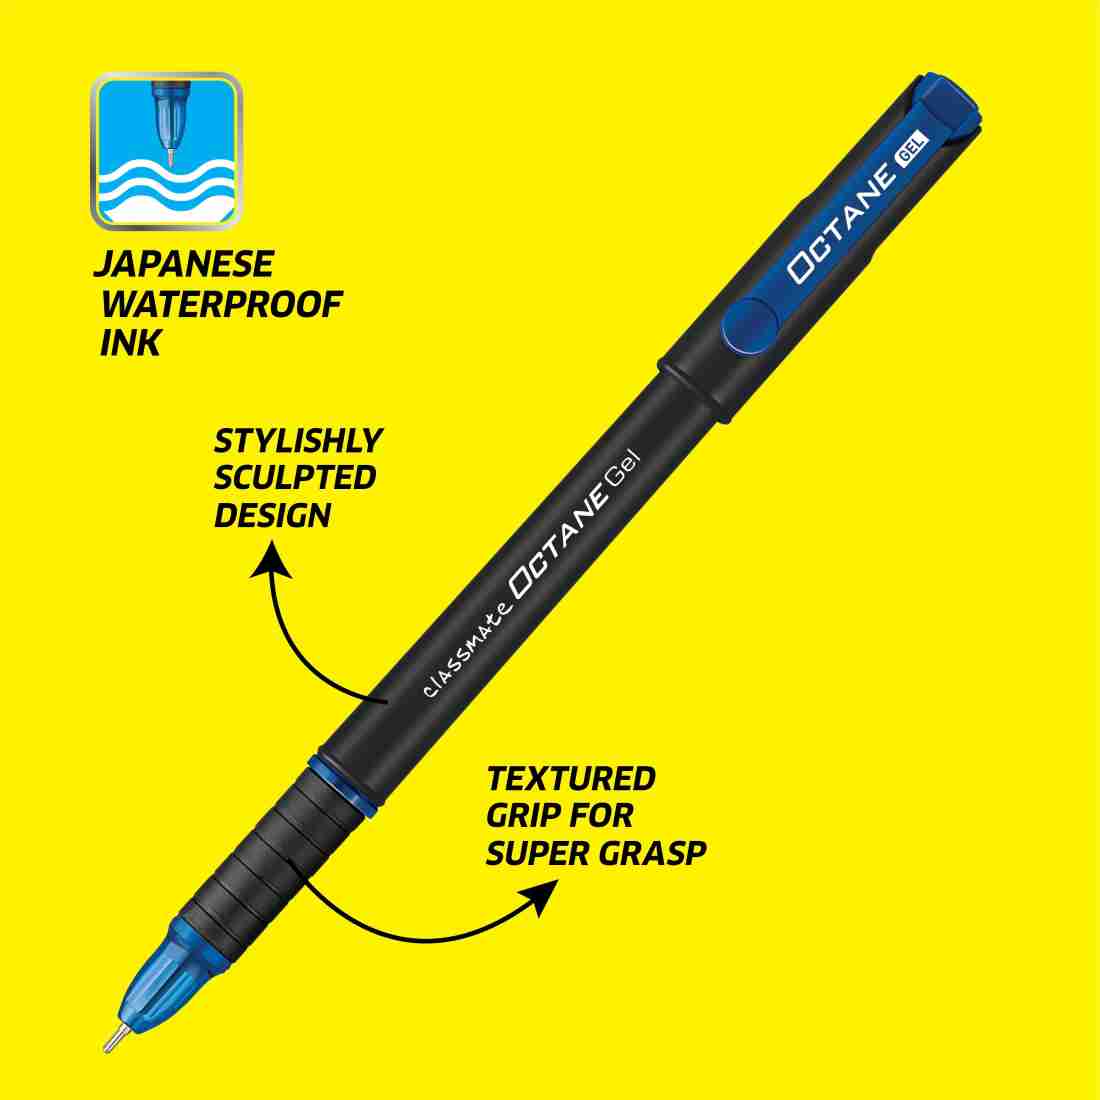 Classmate Gel Black Pens Pack of 10 Pens Gel Pen - Buy Classmate Gel Black  Pens Pack of 10 Pens Gel Pen - Gel Pen Online at Best Prices in India Only  at